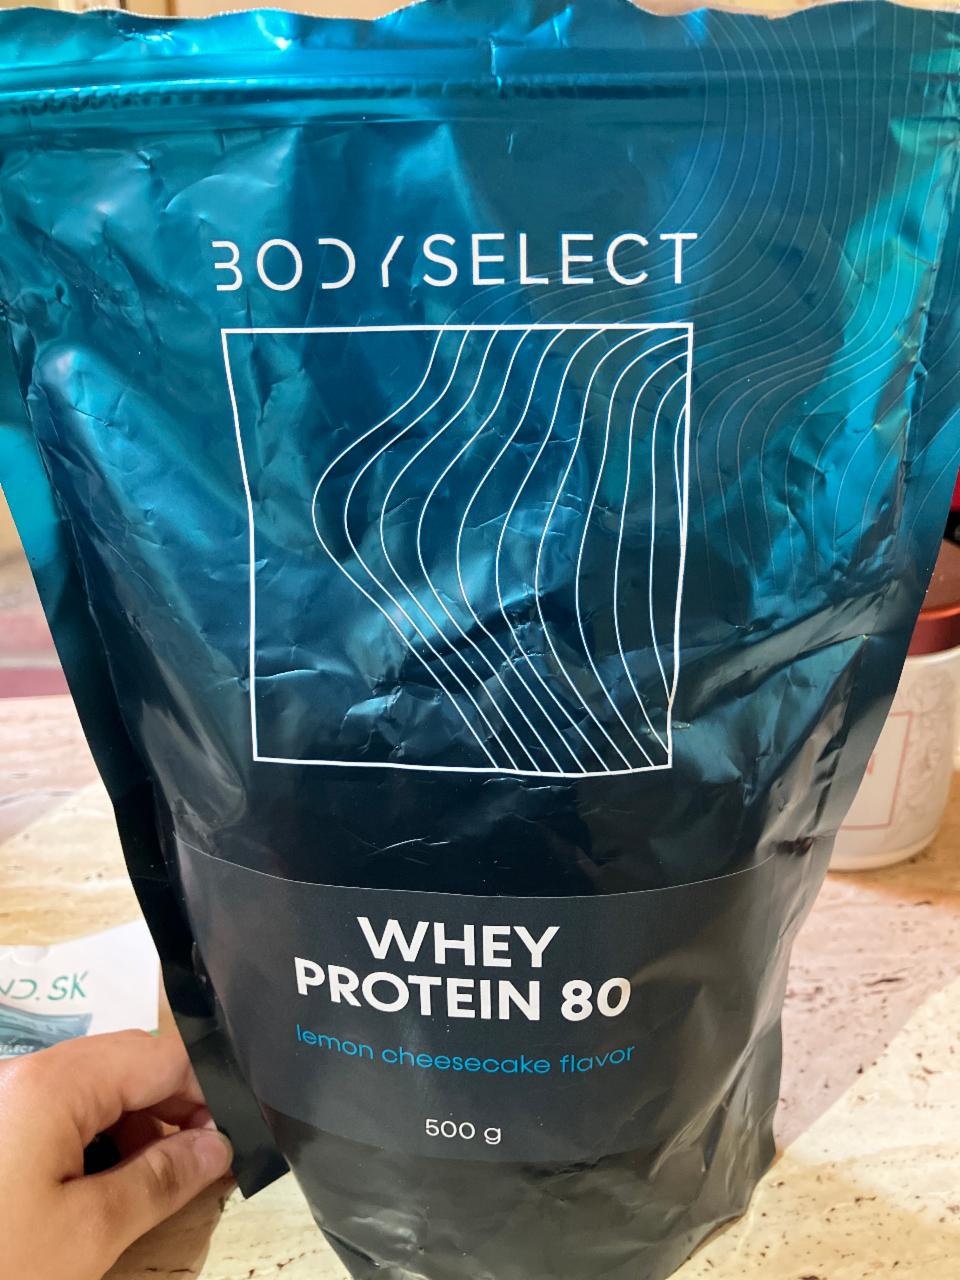 Fotografie - Whey Protein 80 lemom cheesecake flavor Body select